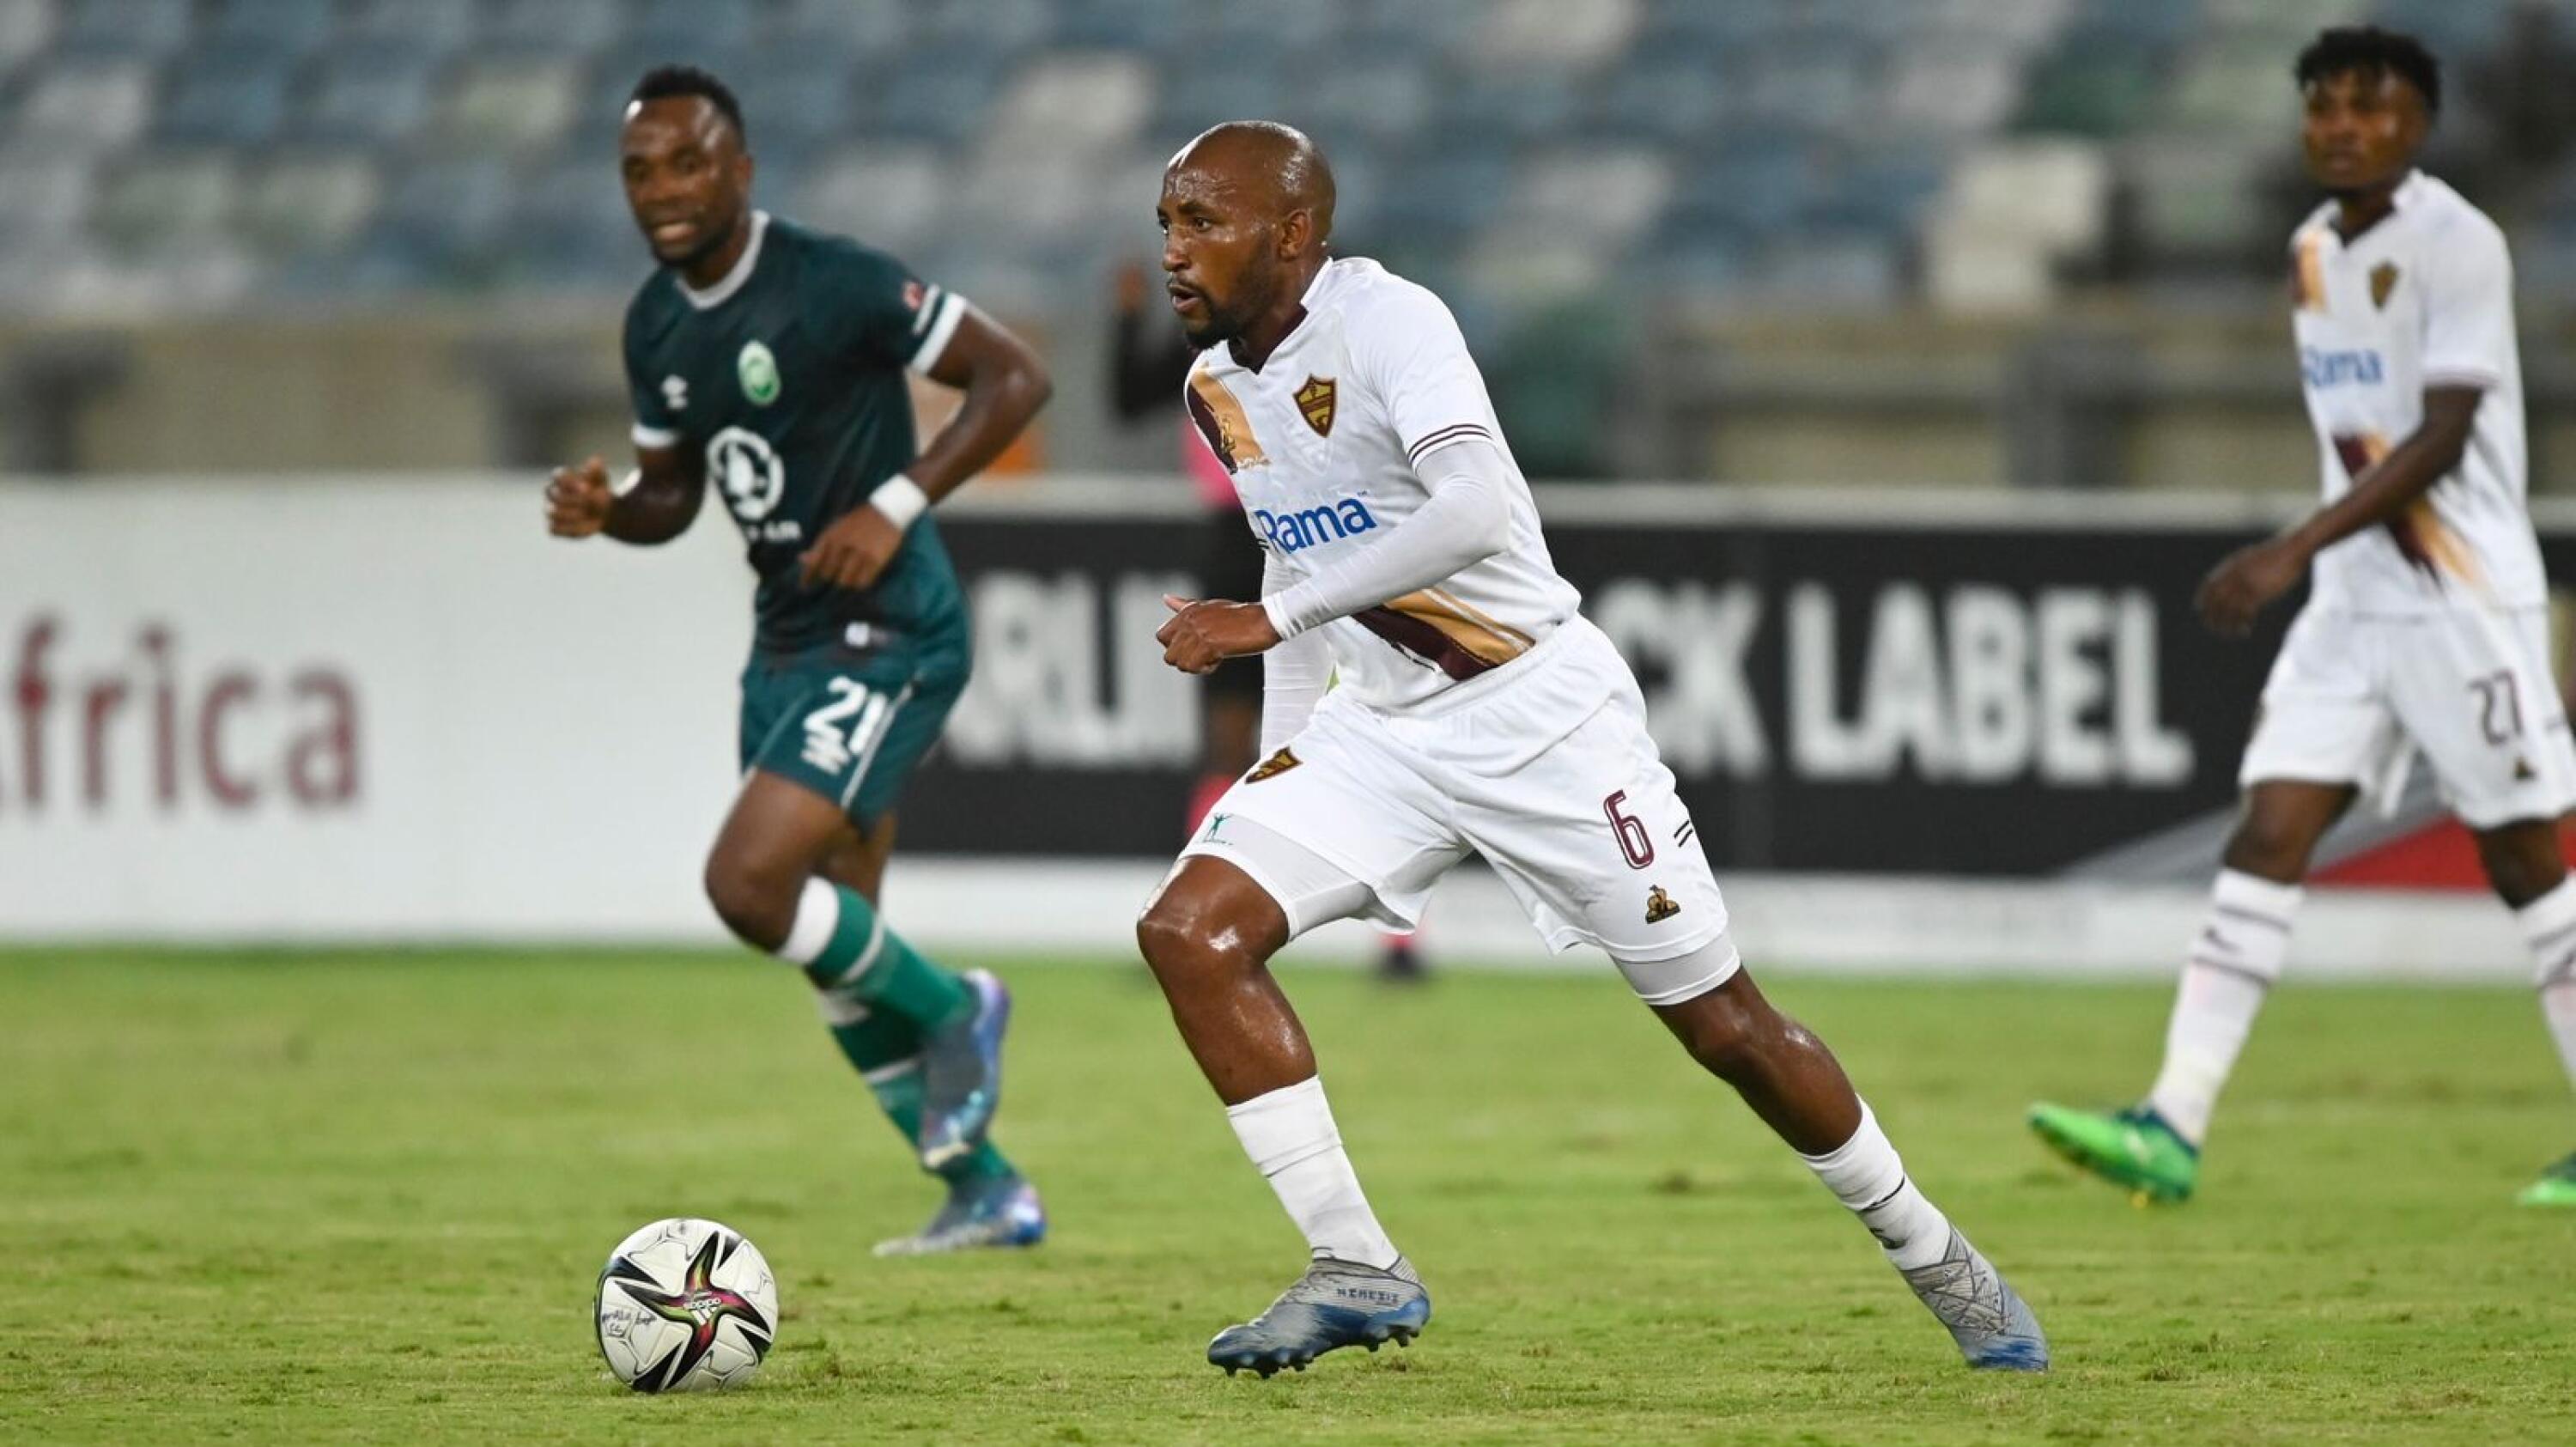 Sibongiseni Mthethwa of Stellenbosch FC runs with the ball during their DStv Premiership match against AmaZulu at Moses Mabhida Stadium in Durban on Wednesday